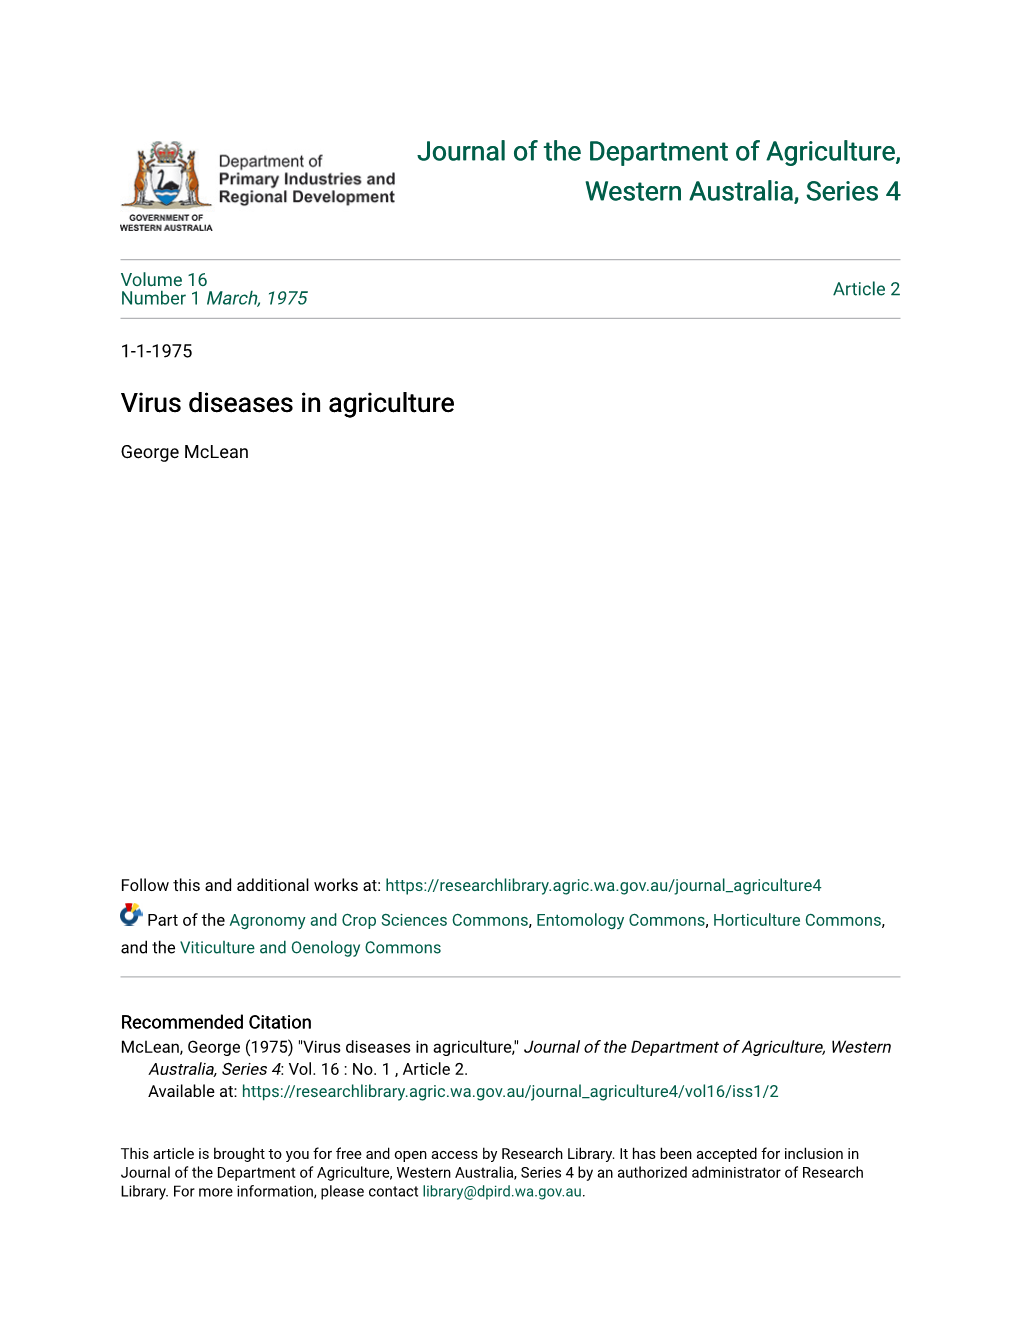 Virus Diseases in Agriculture